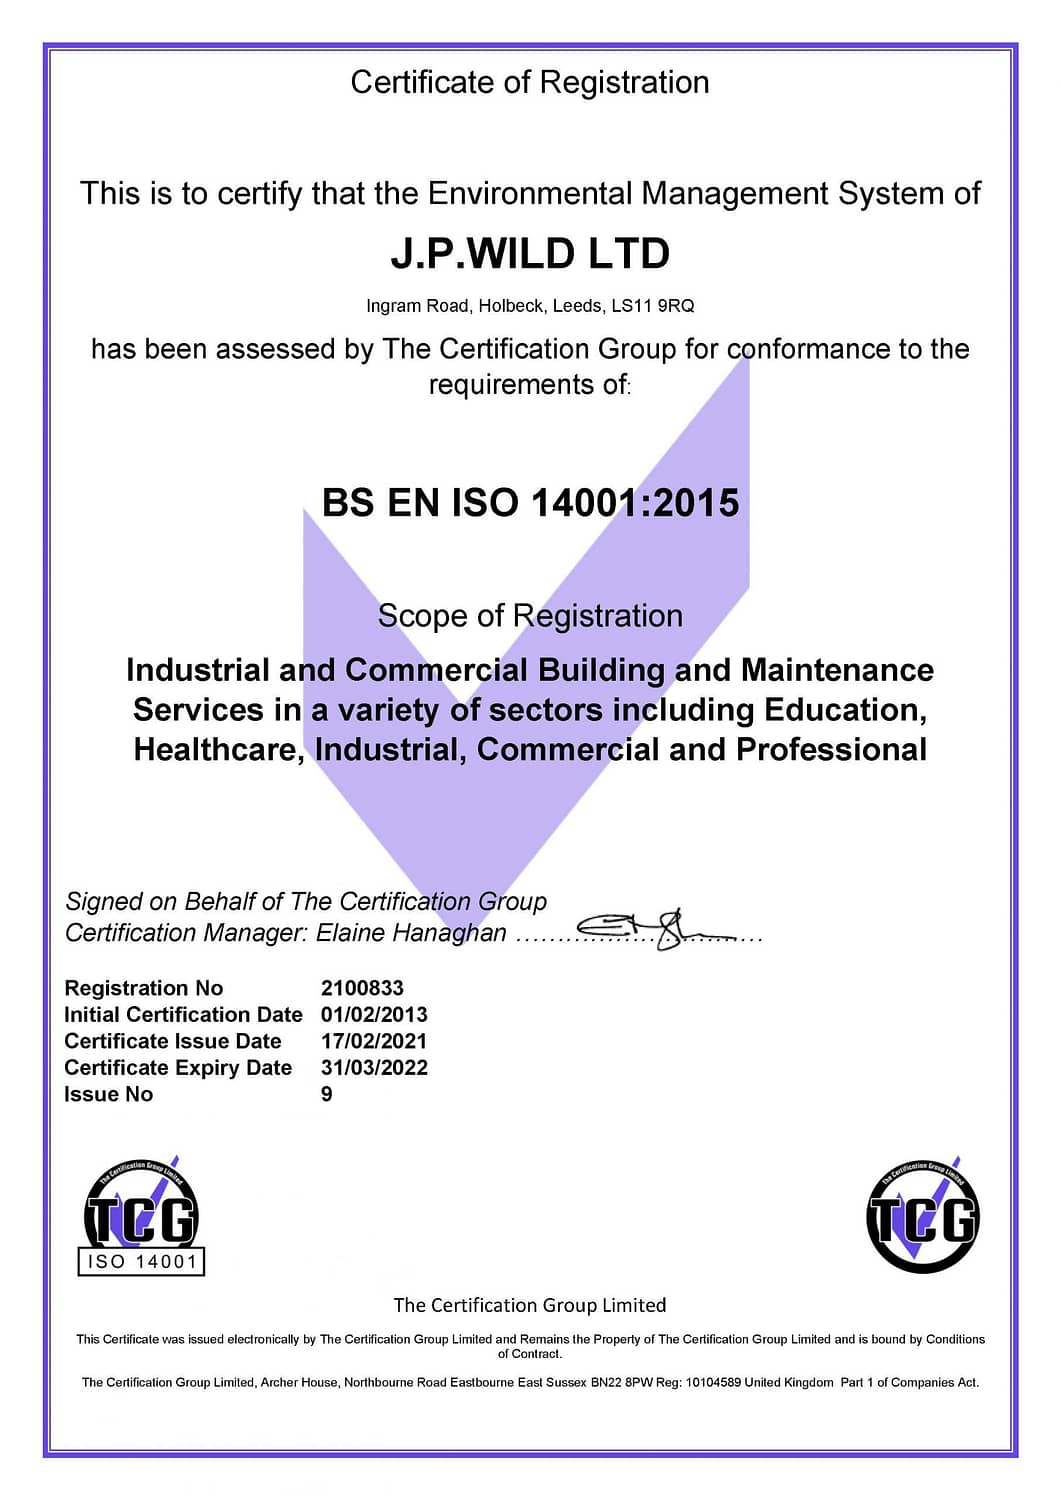 ISO 14001 2015 Certificate - J.P.WILD LTD (17022021)